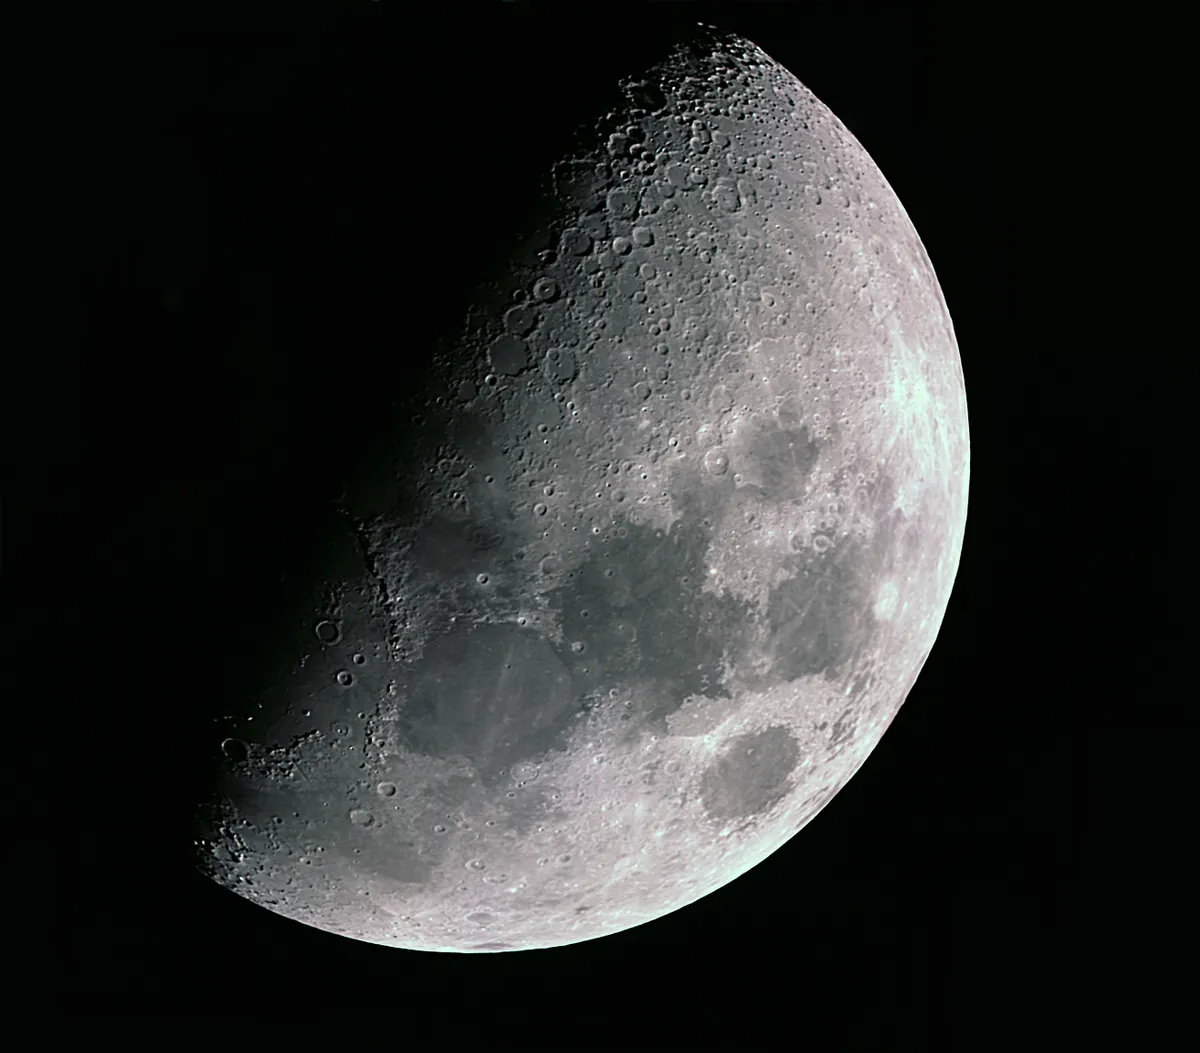 Half Moon by Ronan Monaghan, Belleek, N. Ireland. Equipment: Microsoft Lifecam Webcam, Skywatcher 150p